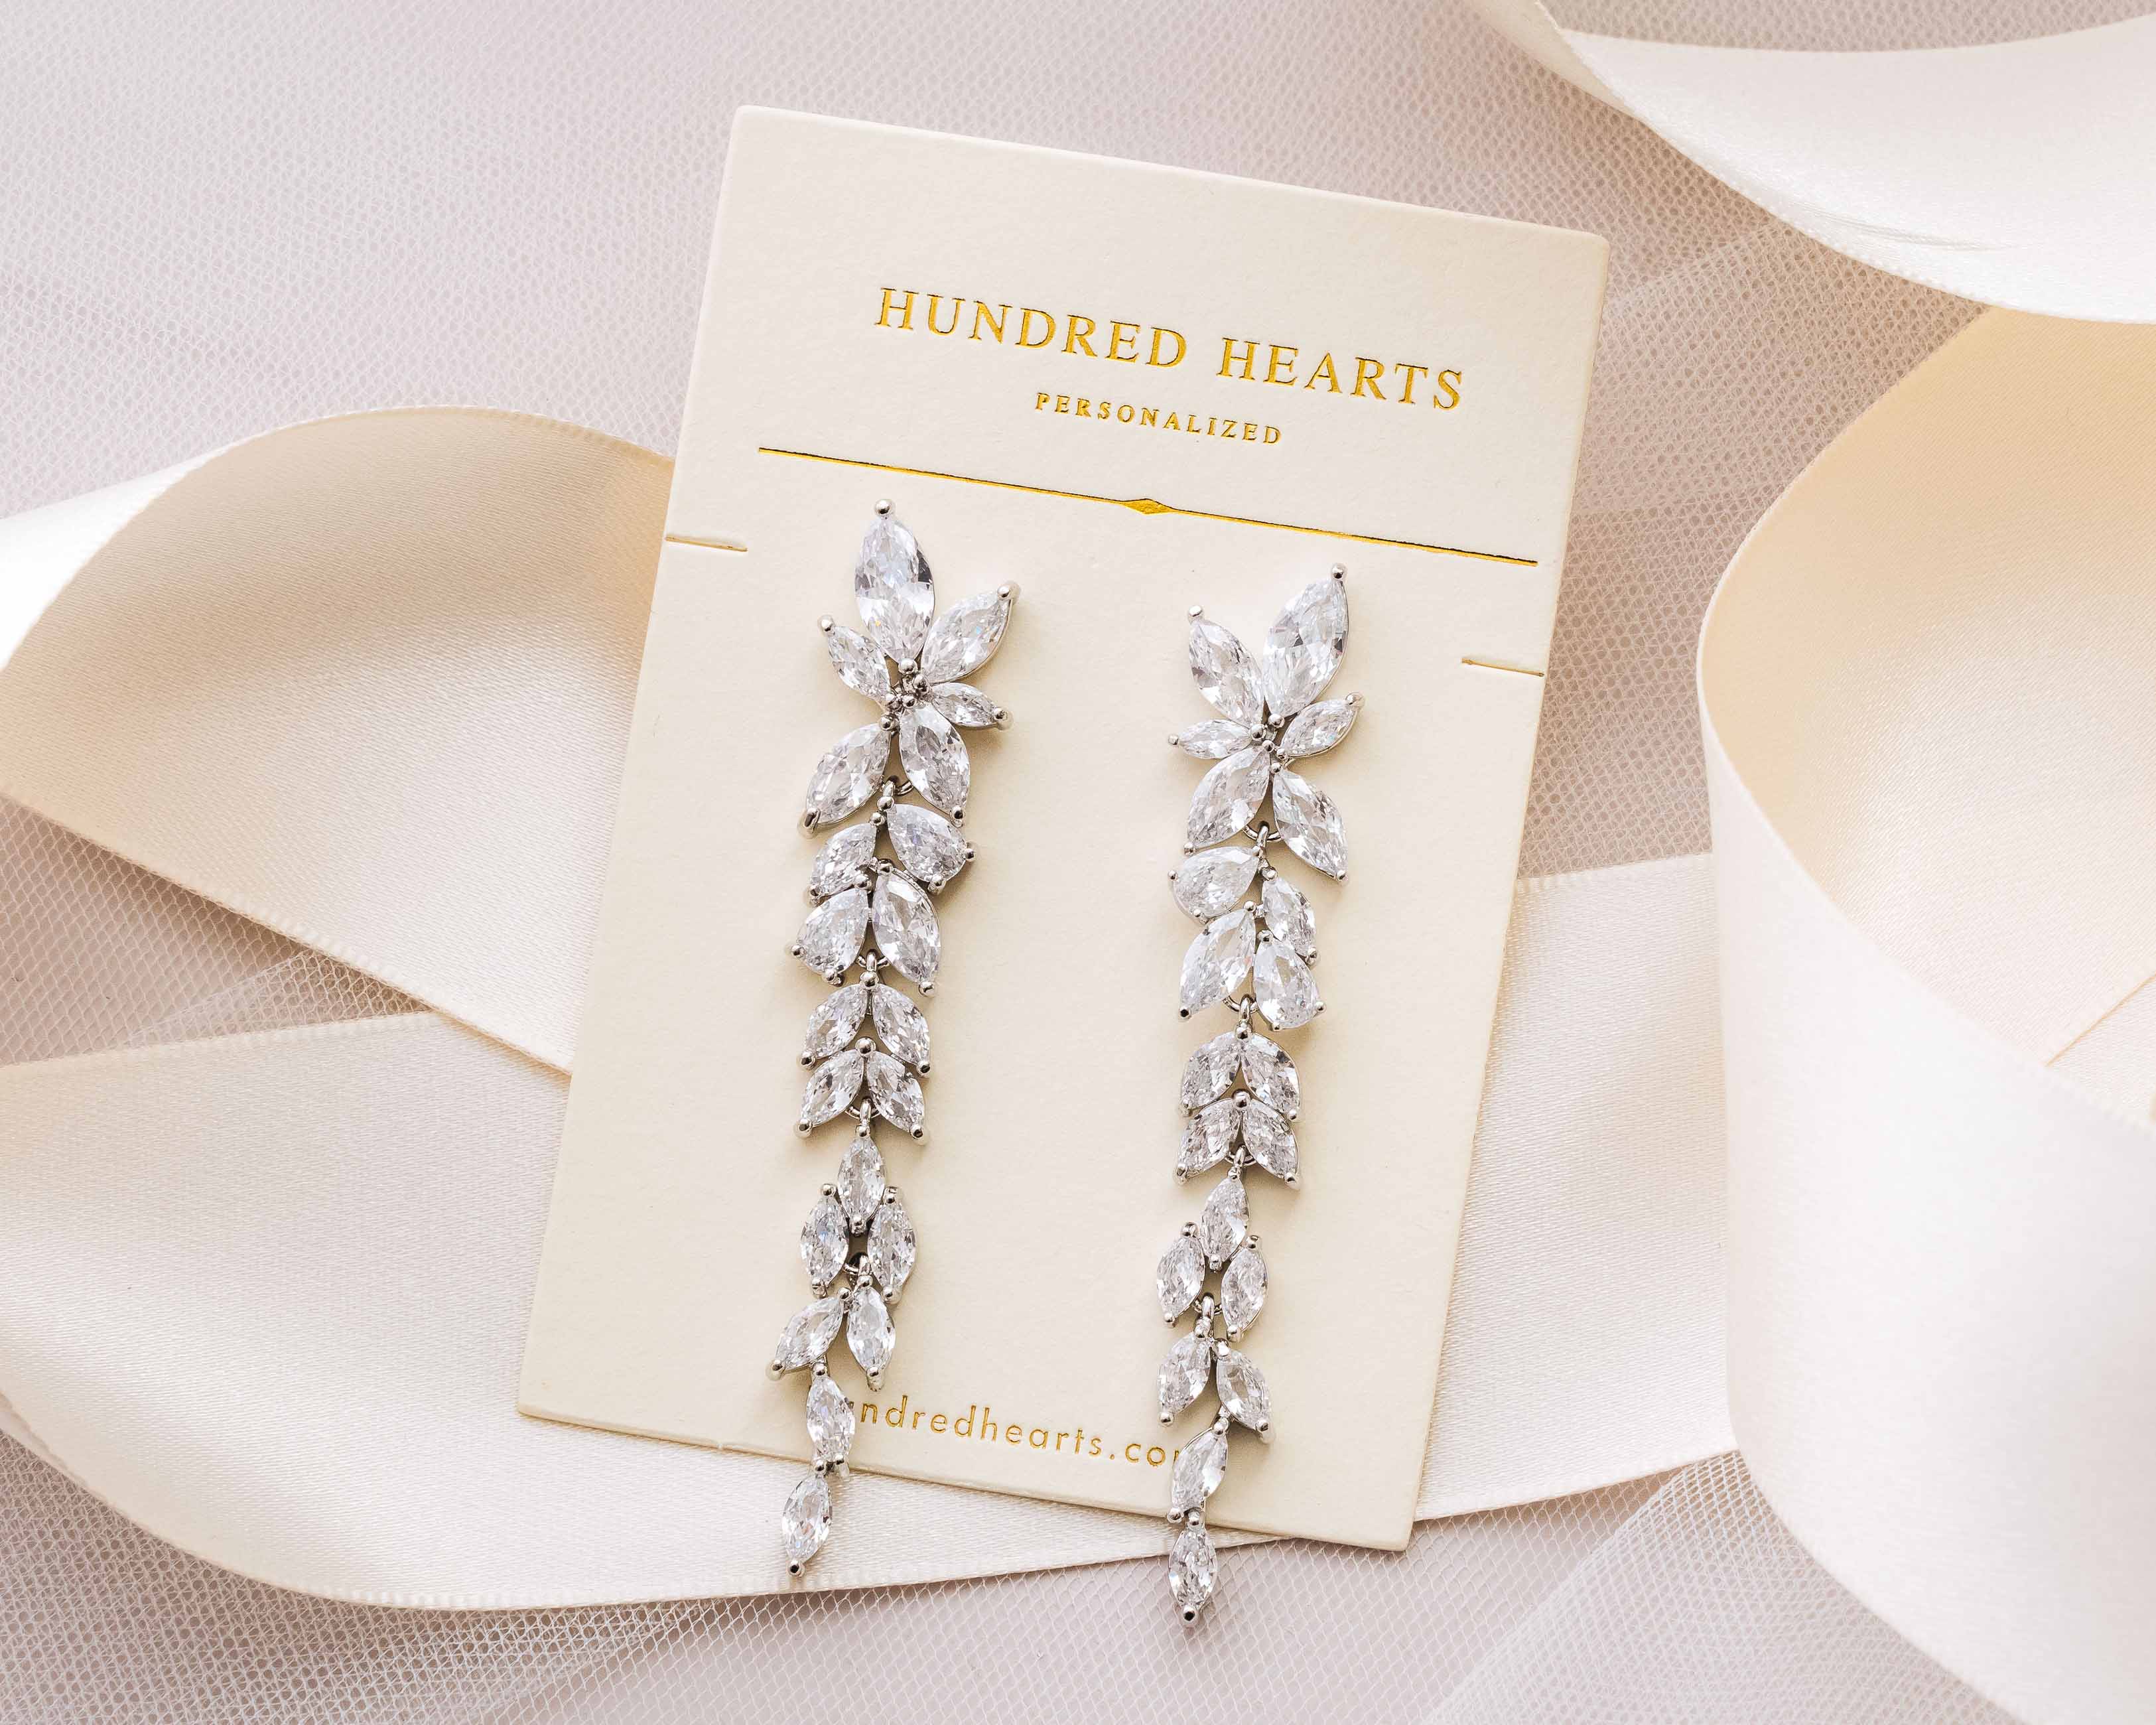 Chandelier Earrings - Silver Bridal Chandelier Earrings - The perfect bridal accessories.